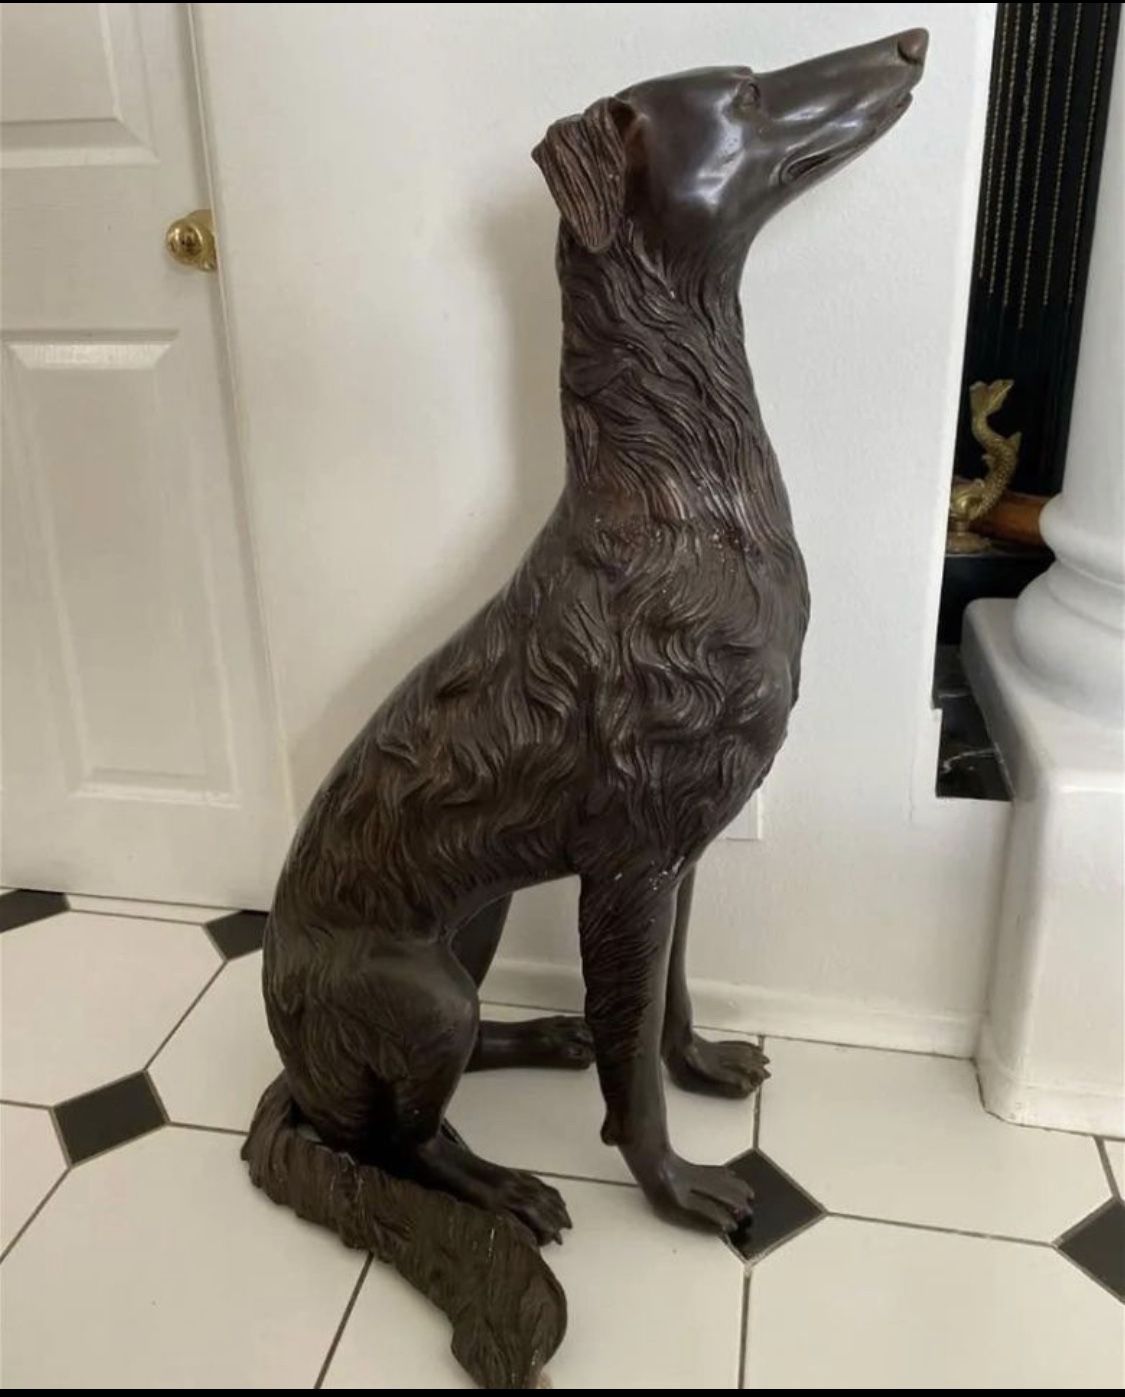 Life Size Bronze Borzoi Dog (Russian Hunting Sighthound) Sculpture